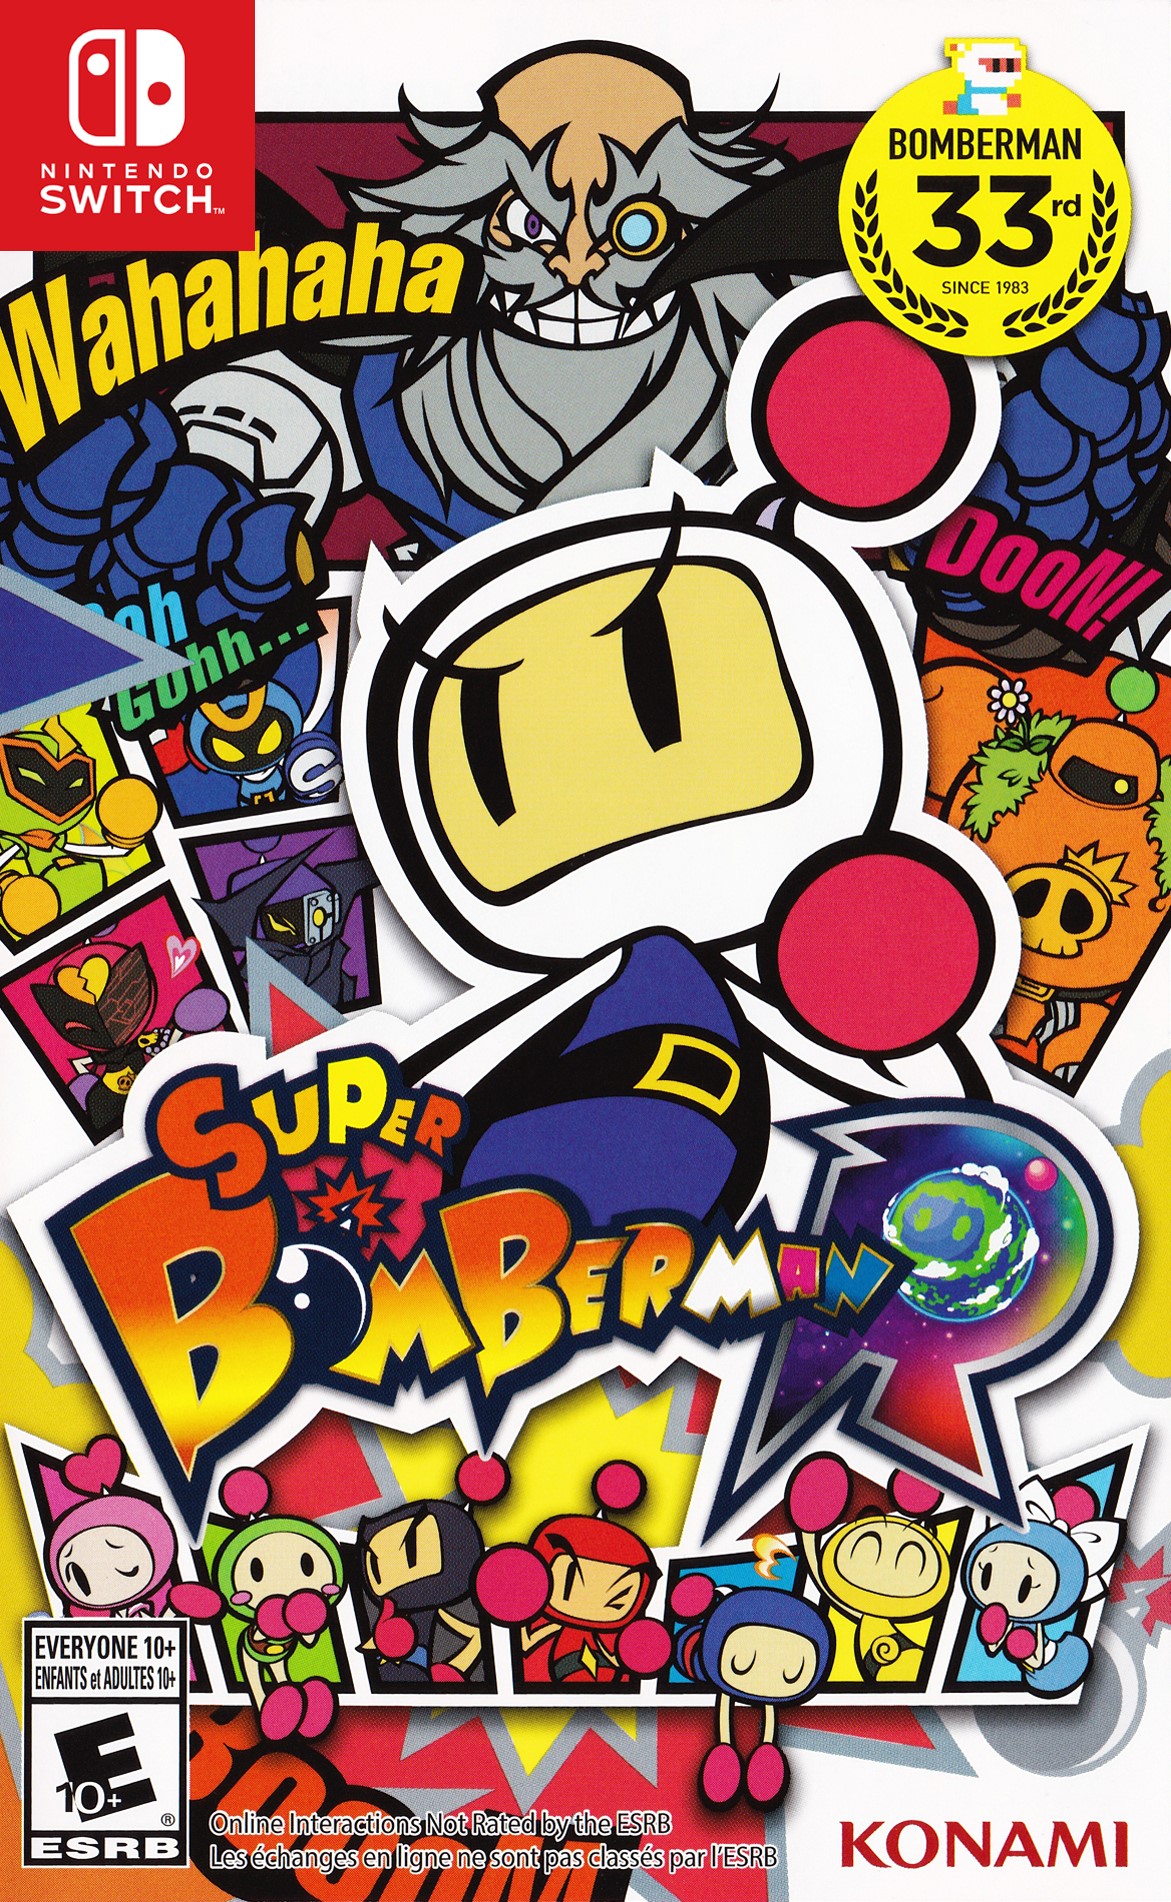 'Super BomberMan R'